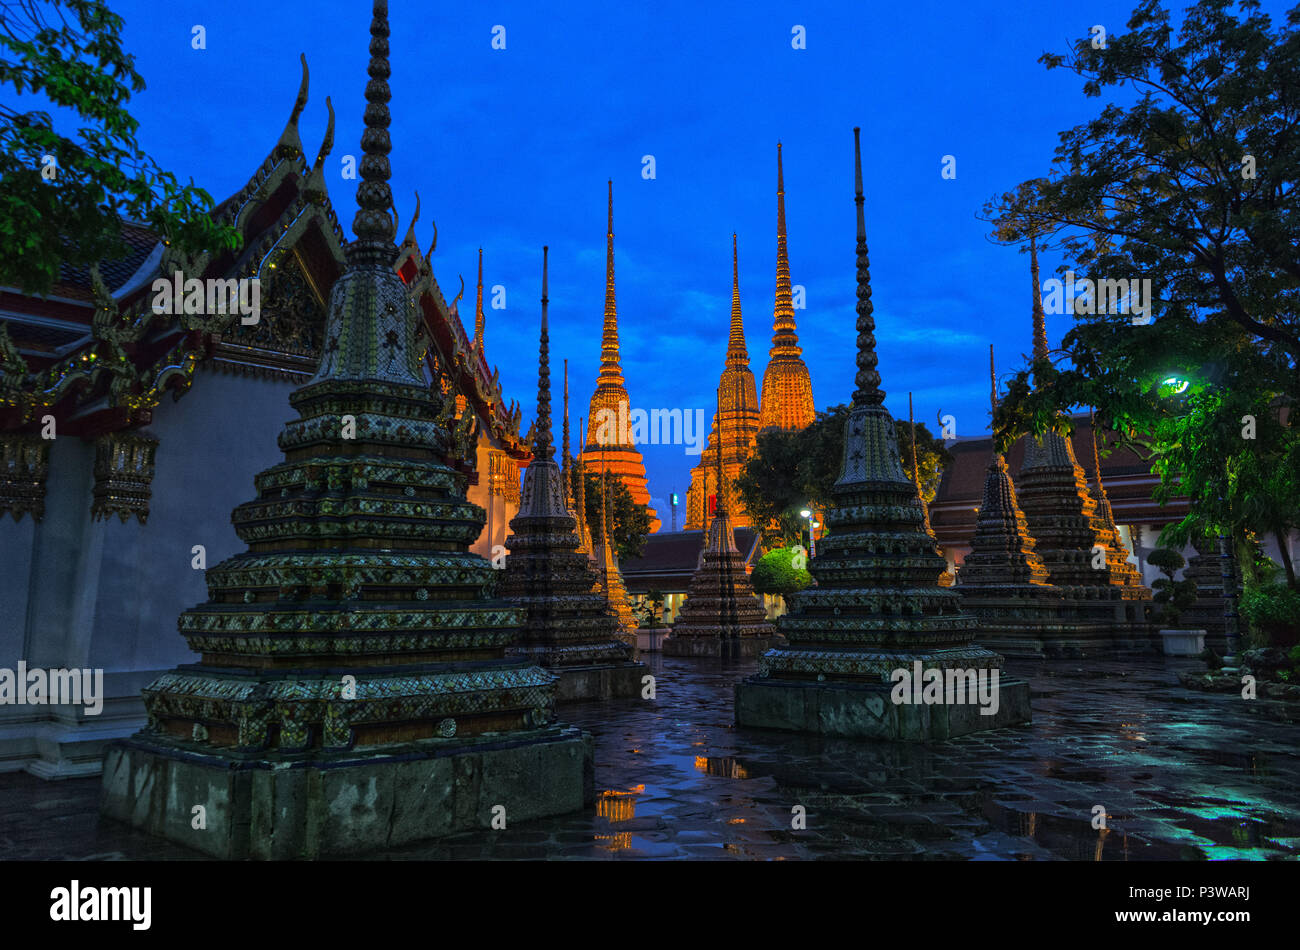 beautiful temple - HDR Image Stock Photo